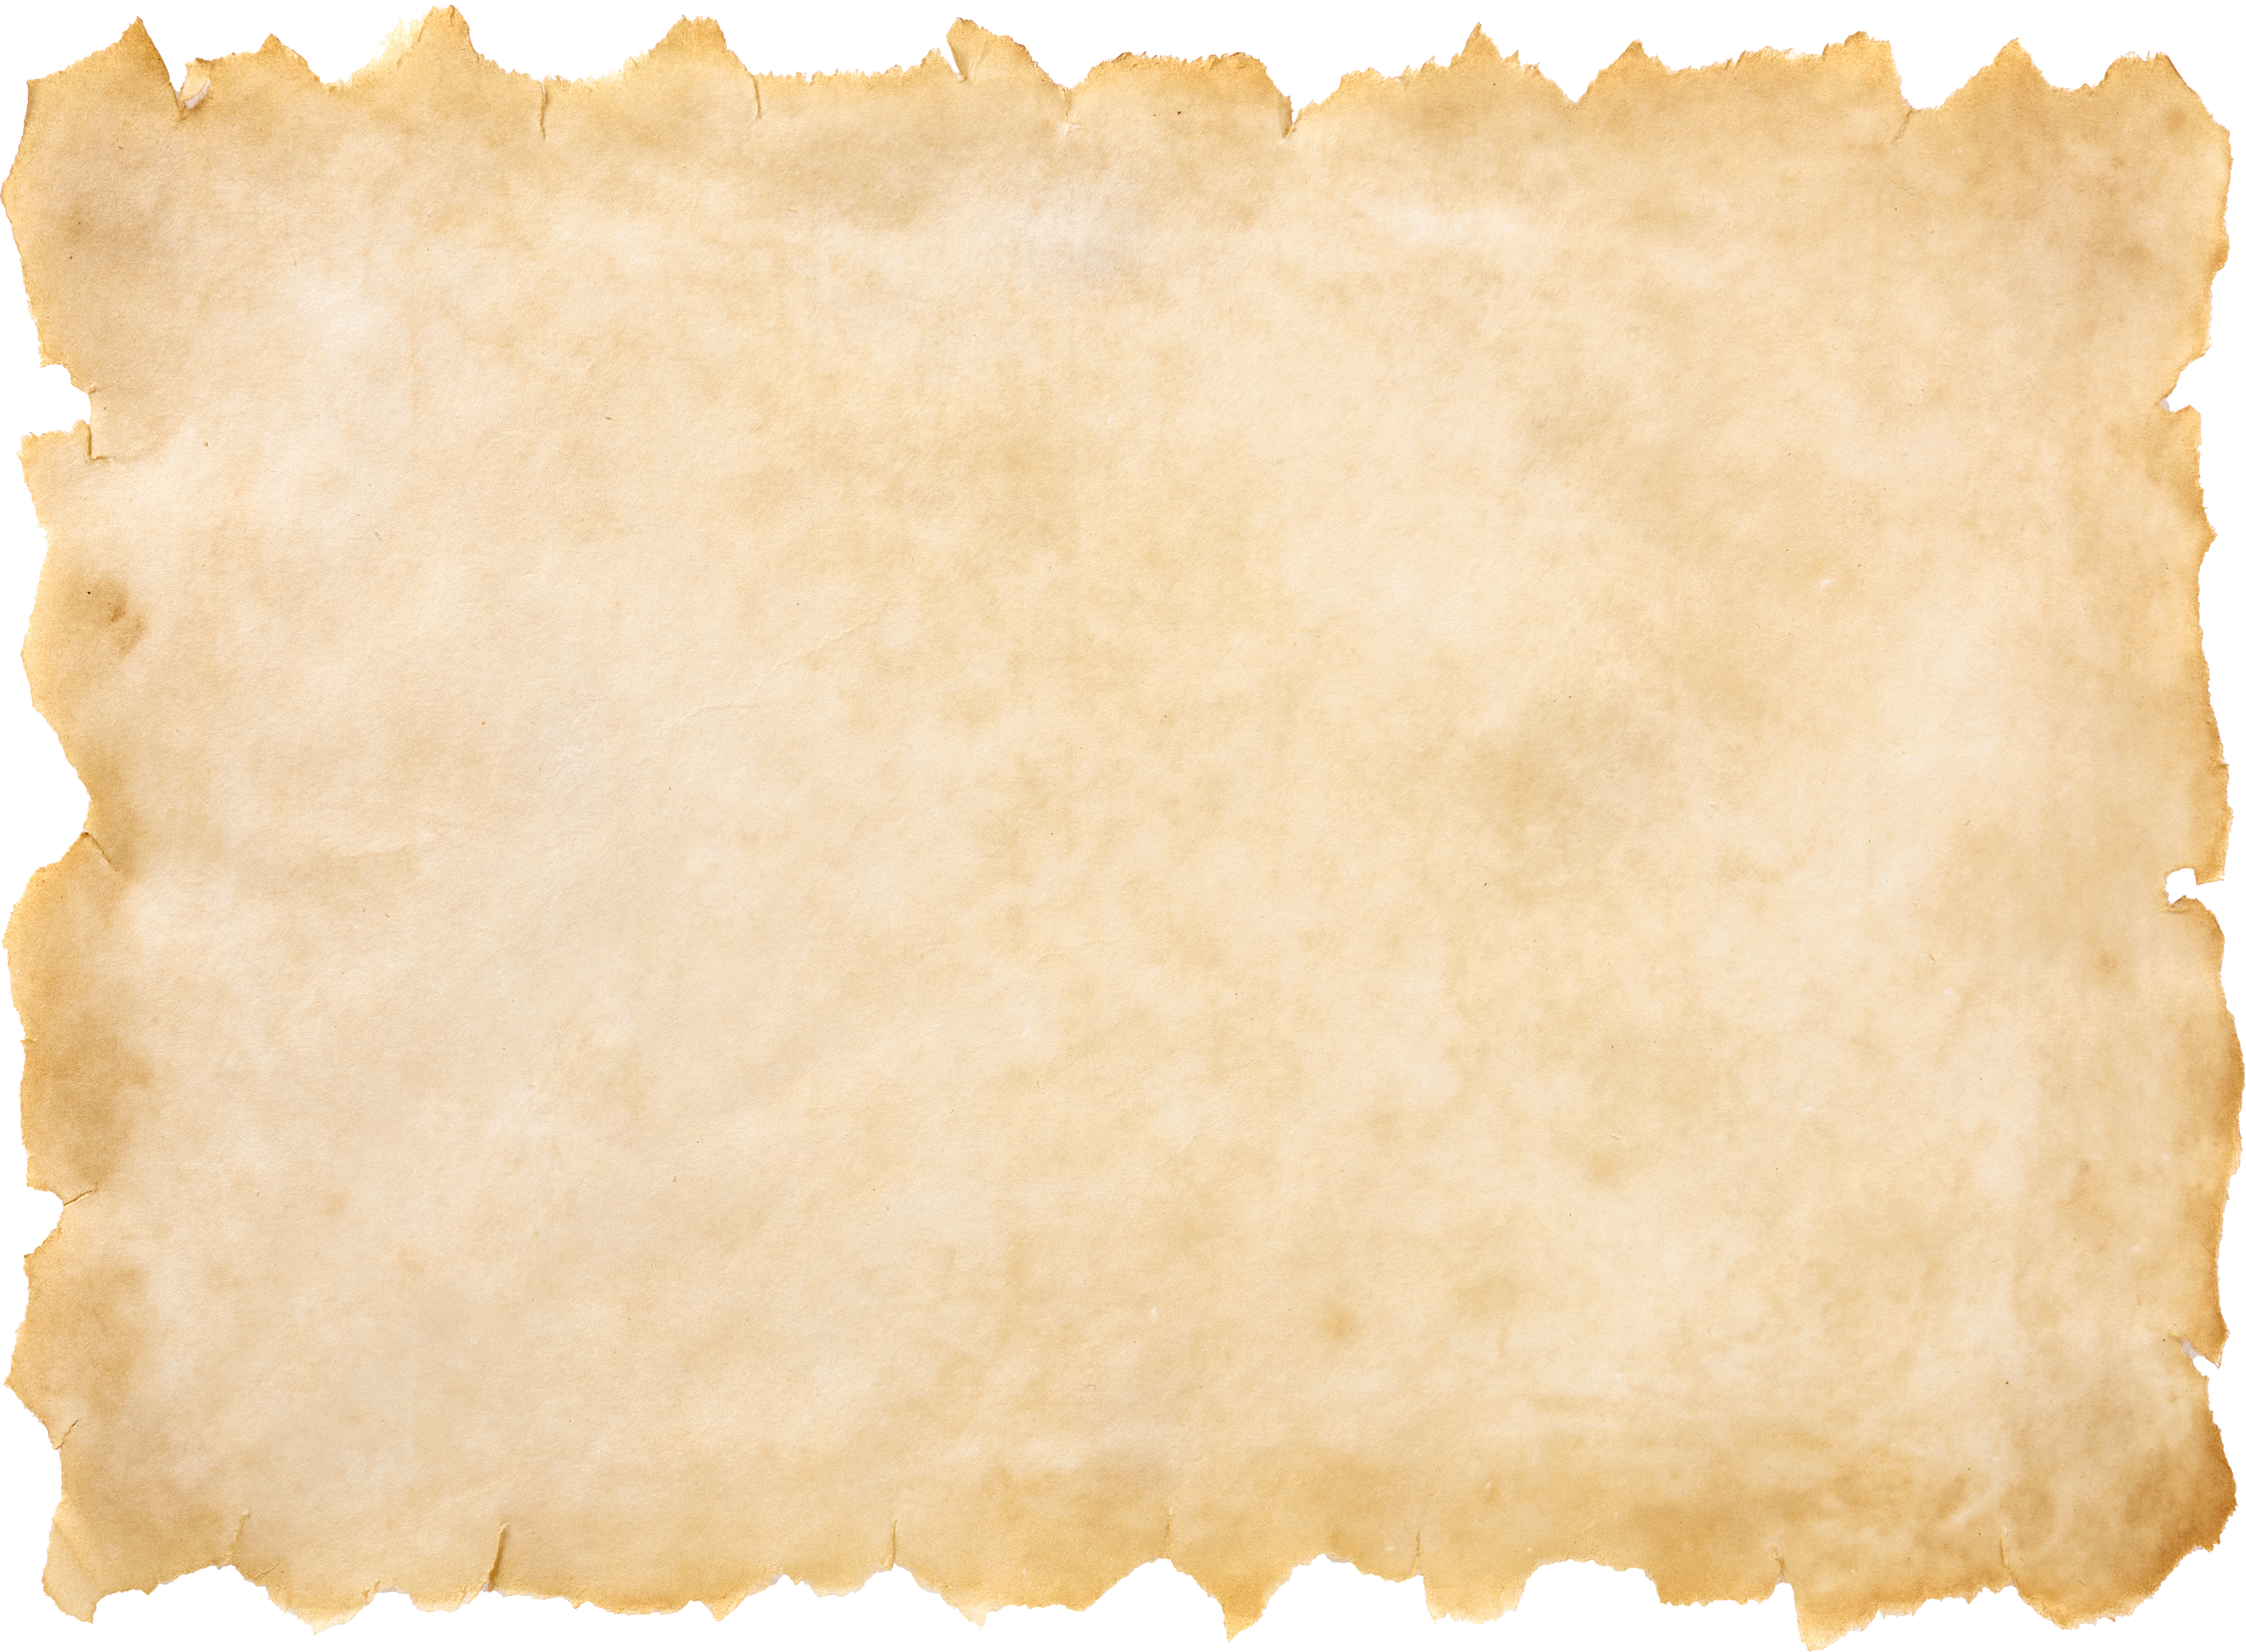 Old Parchment Paper Sheet Texture Background.